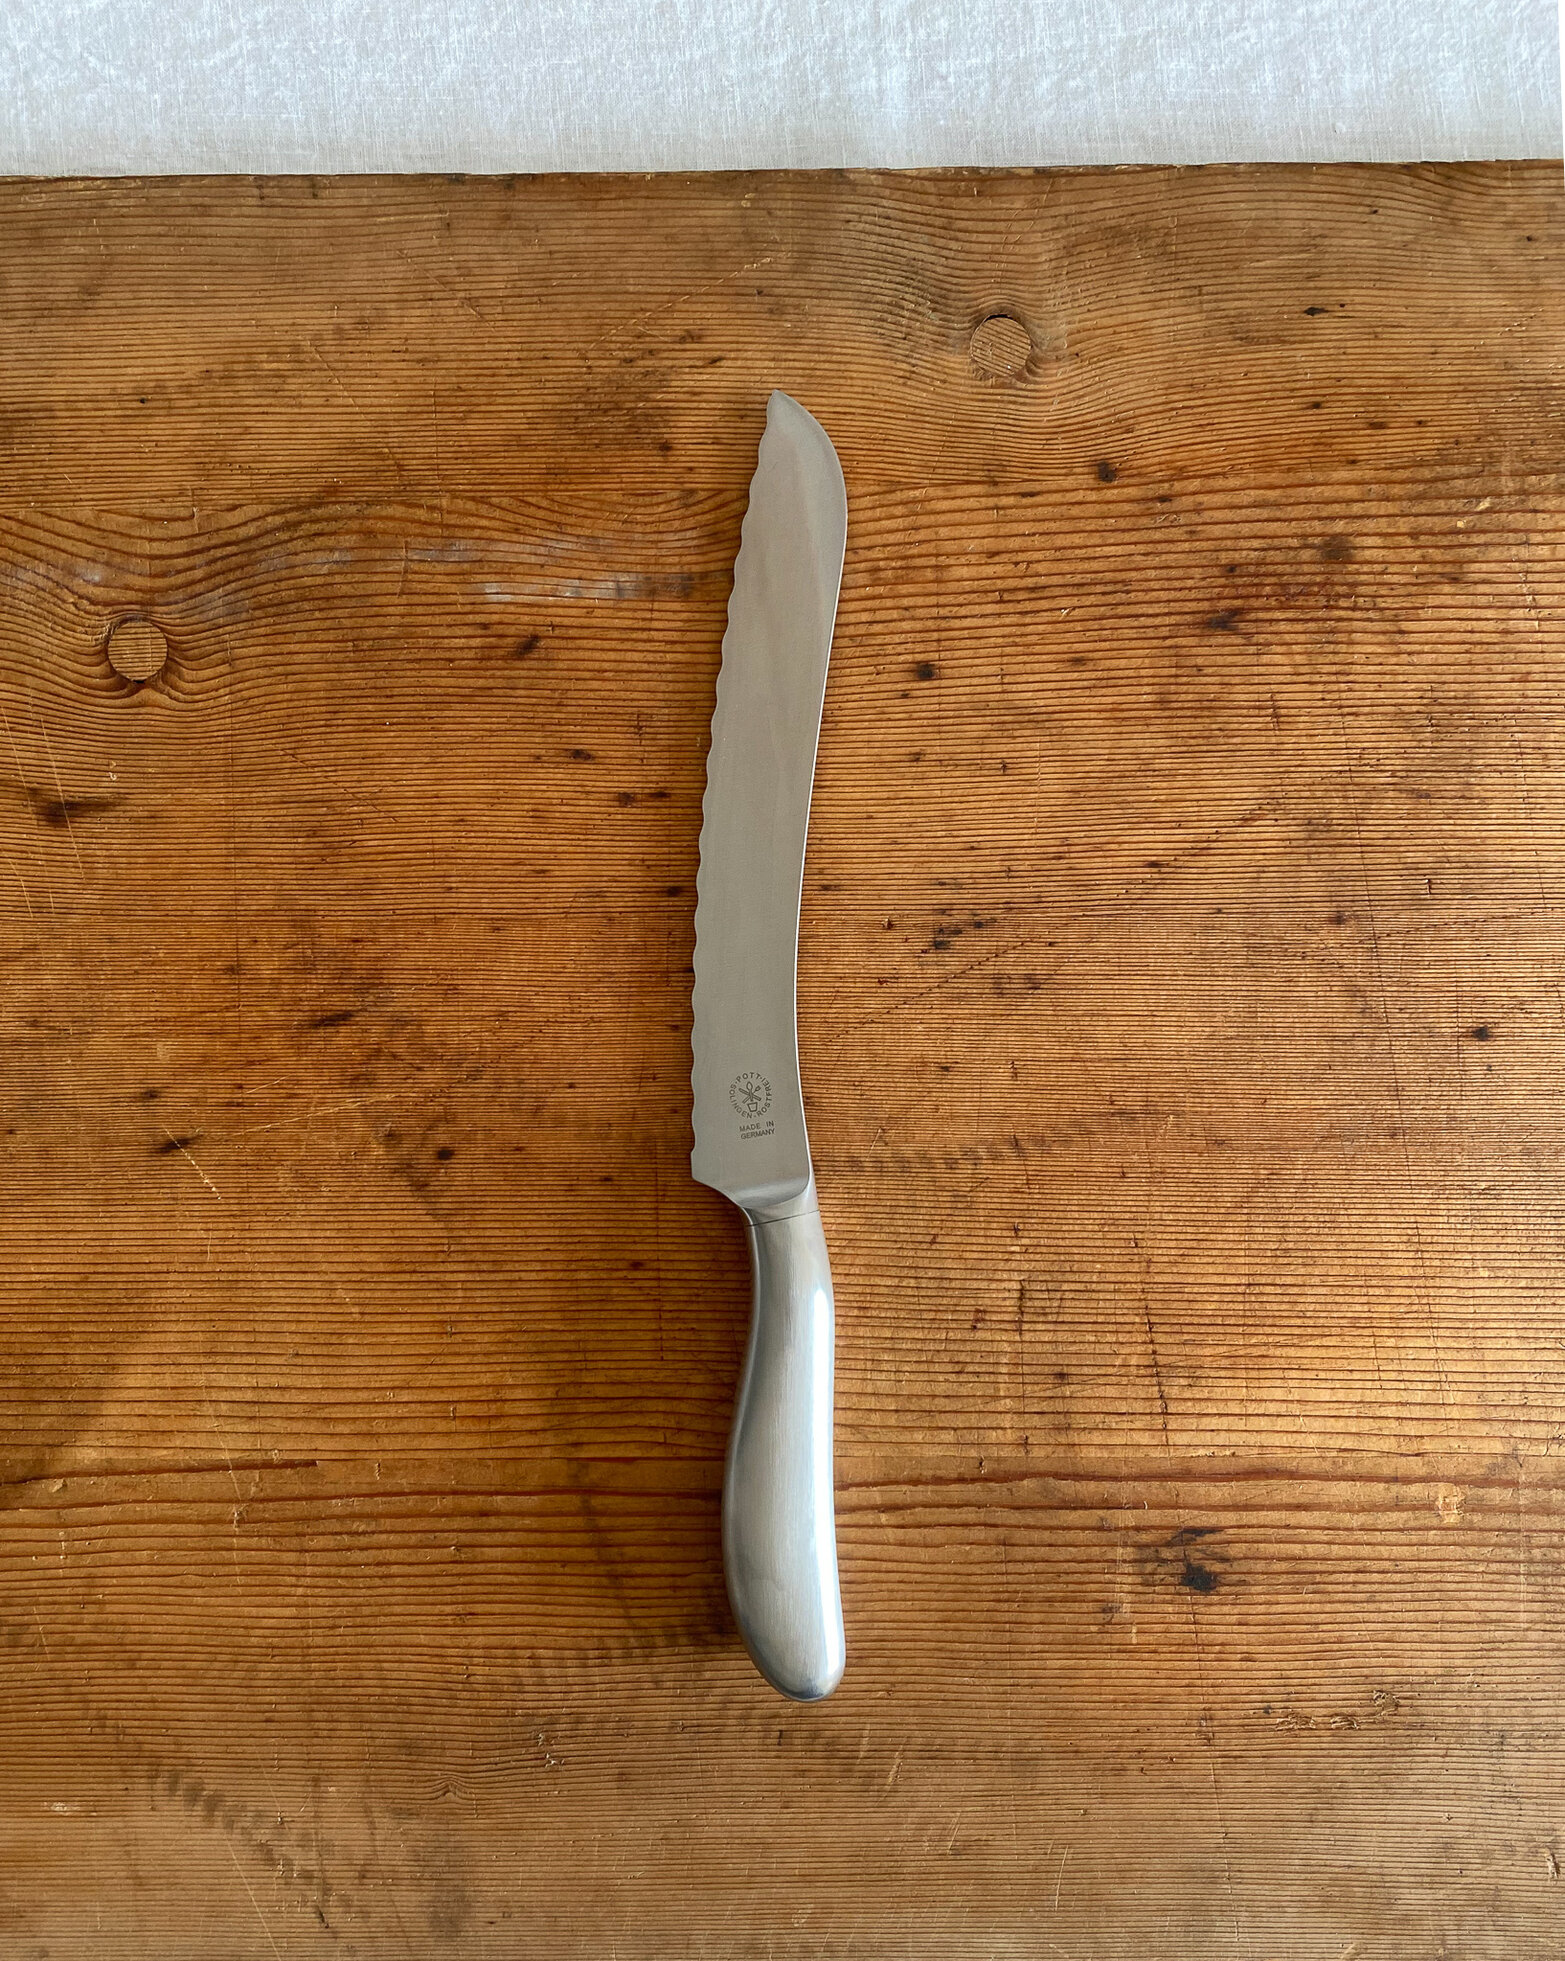 Hugo pott bread knife